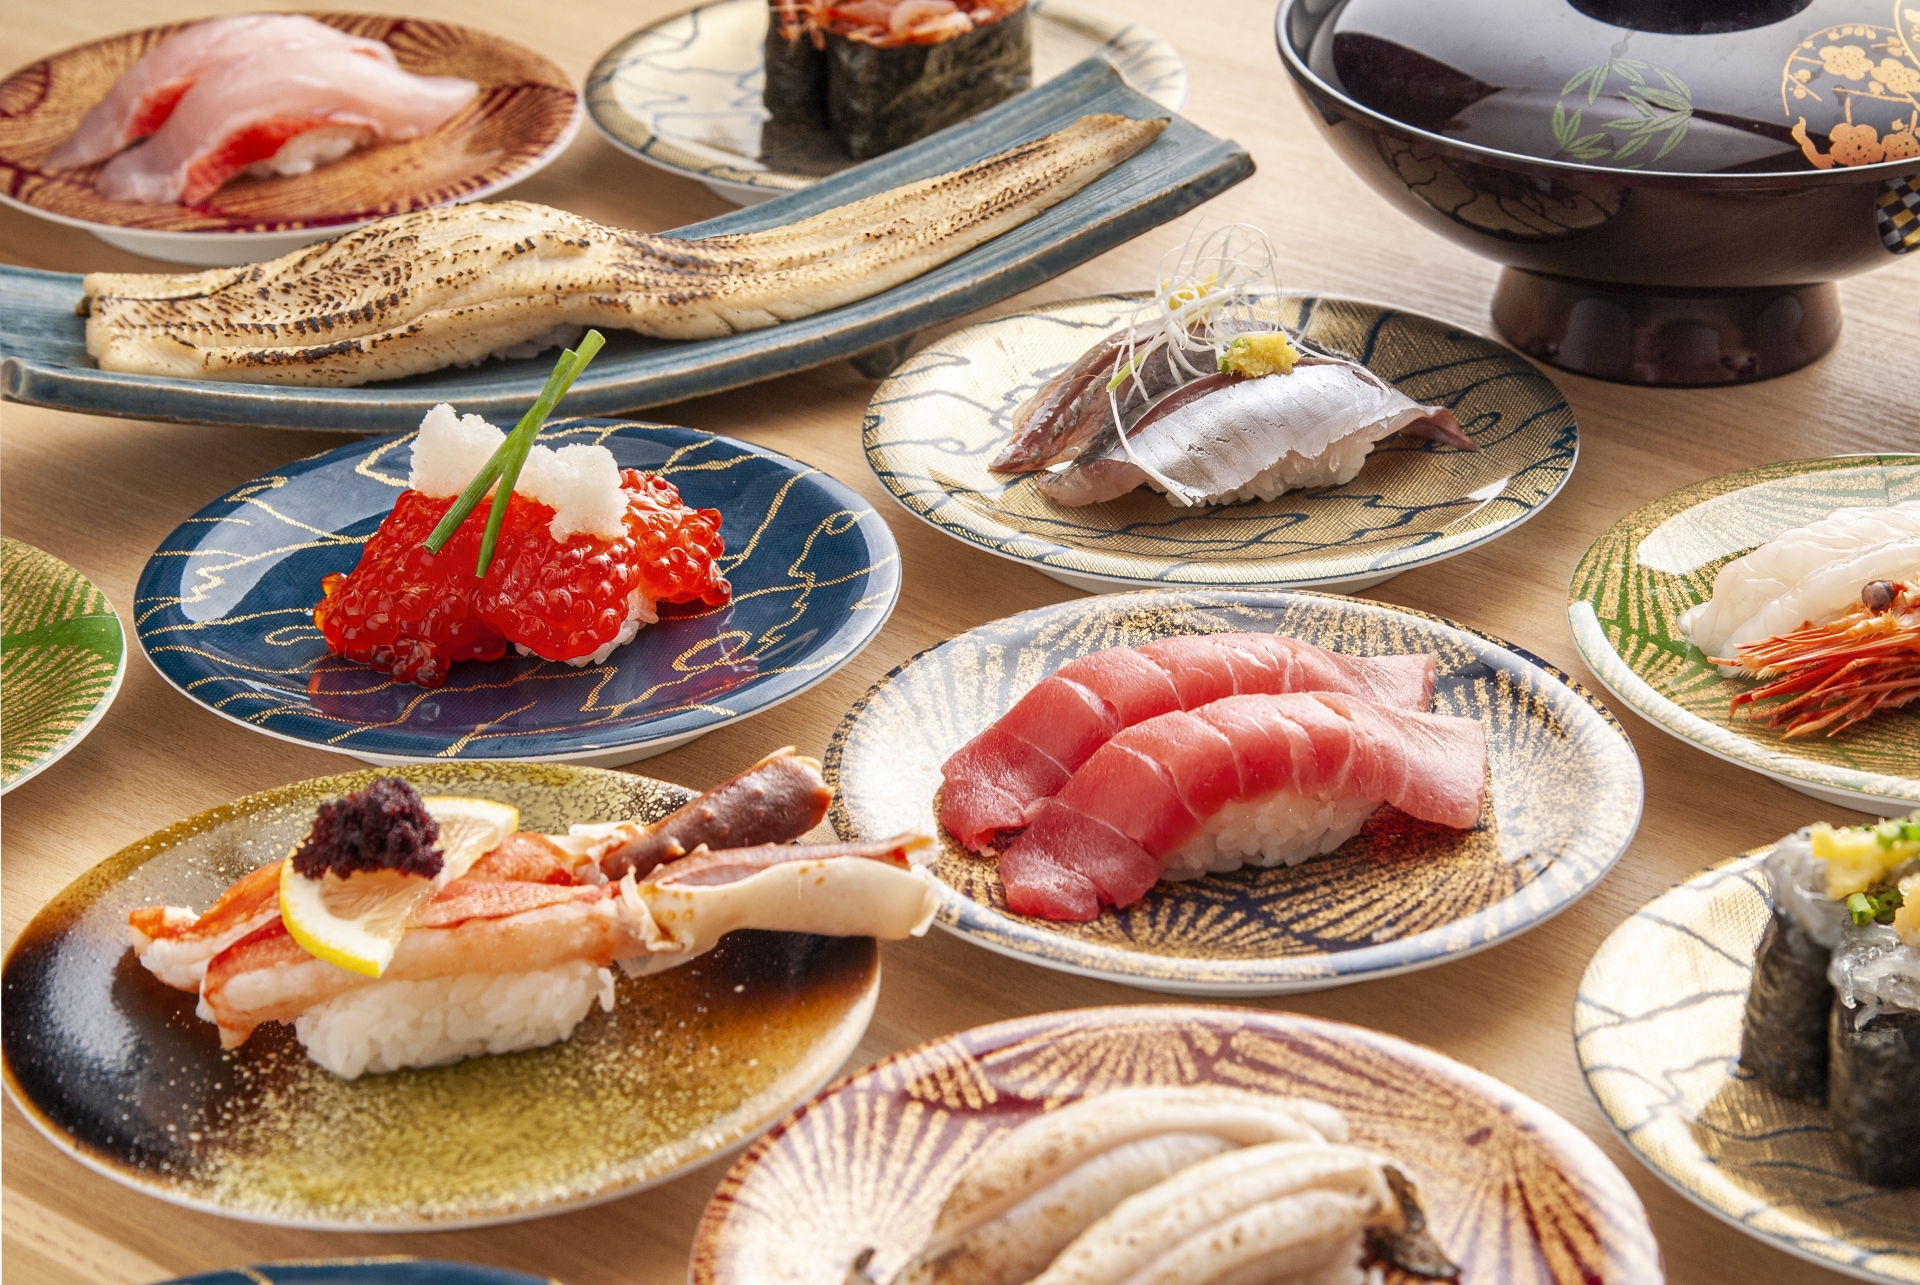 How to enjoy conveyor belt sushi? Introducing Japanese conveyor belt sushi etiquette and popular restaurants